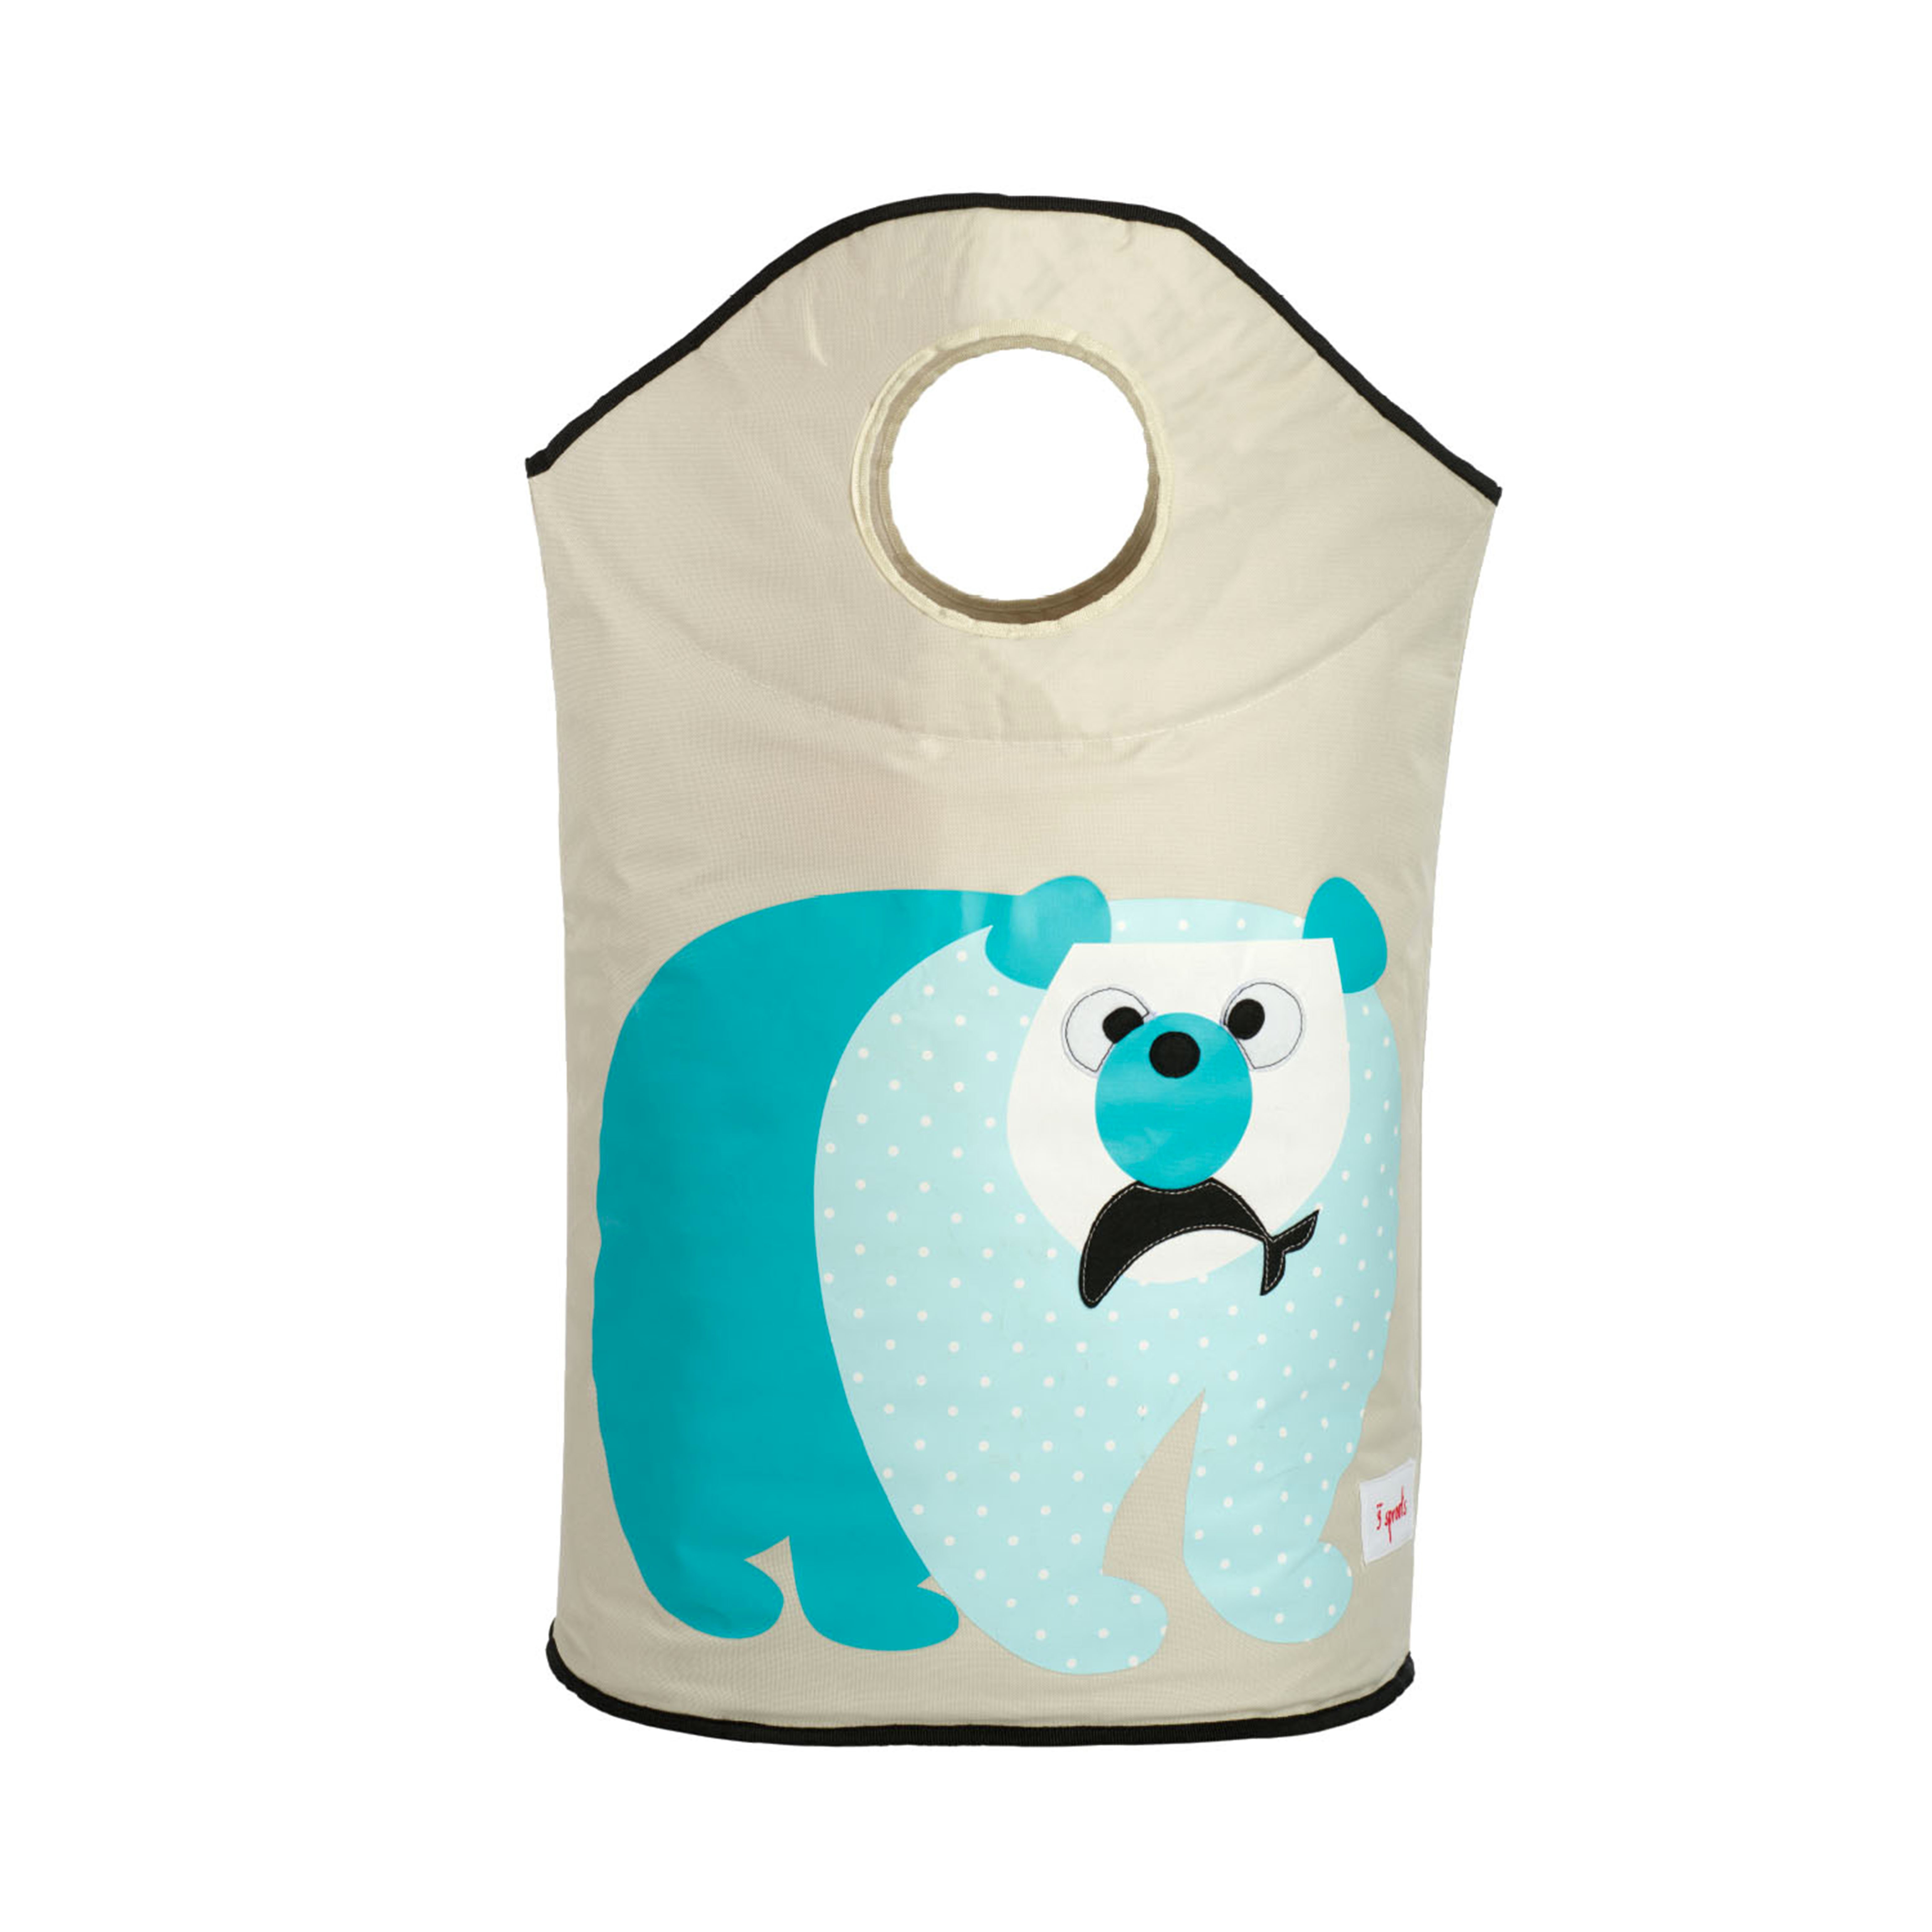 3 Sprouts - Laundry Hamper - Blue Polar Bear